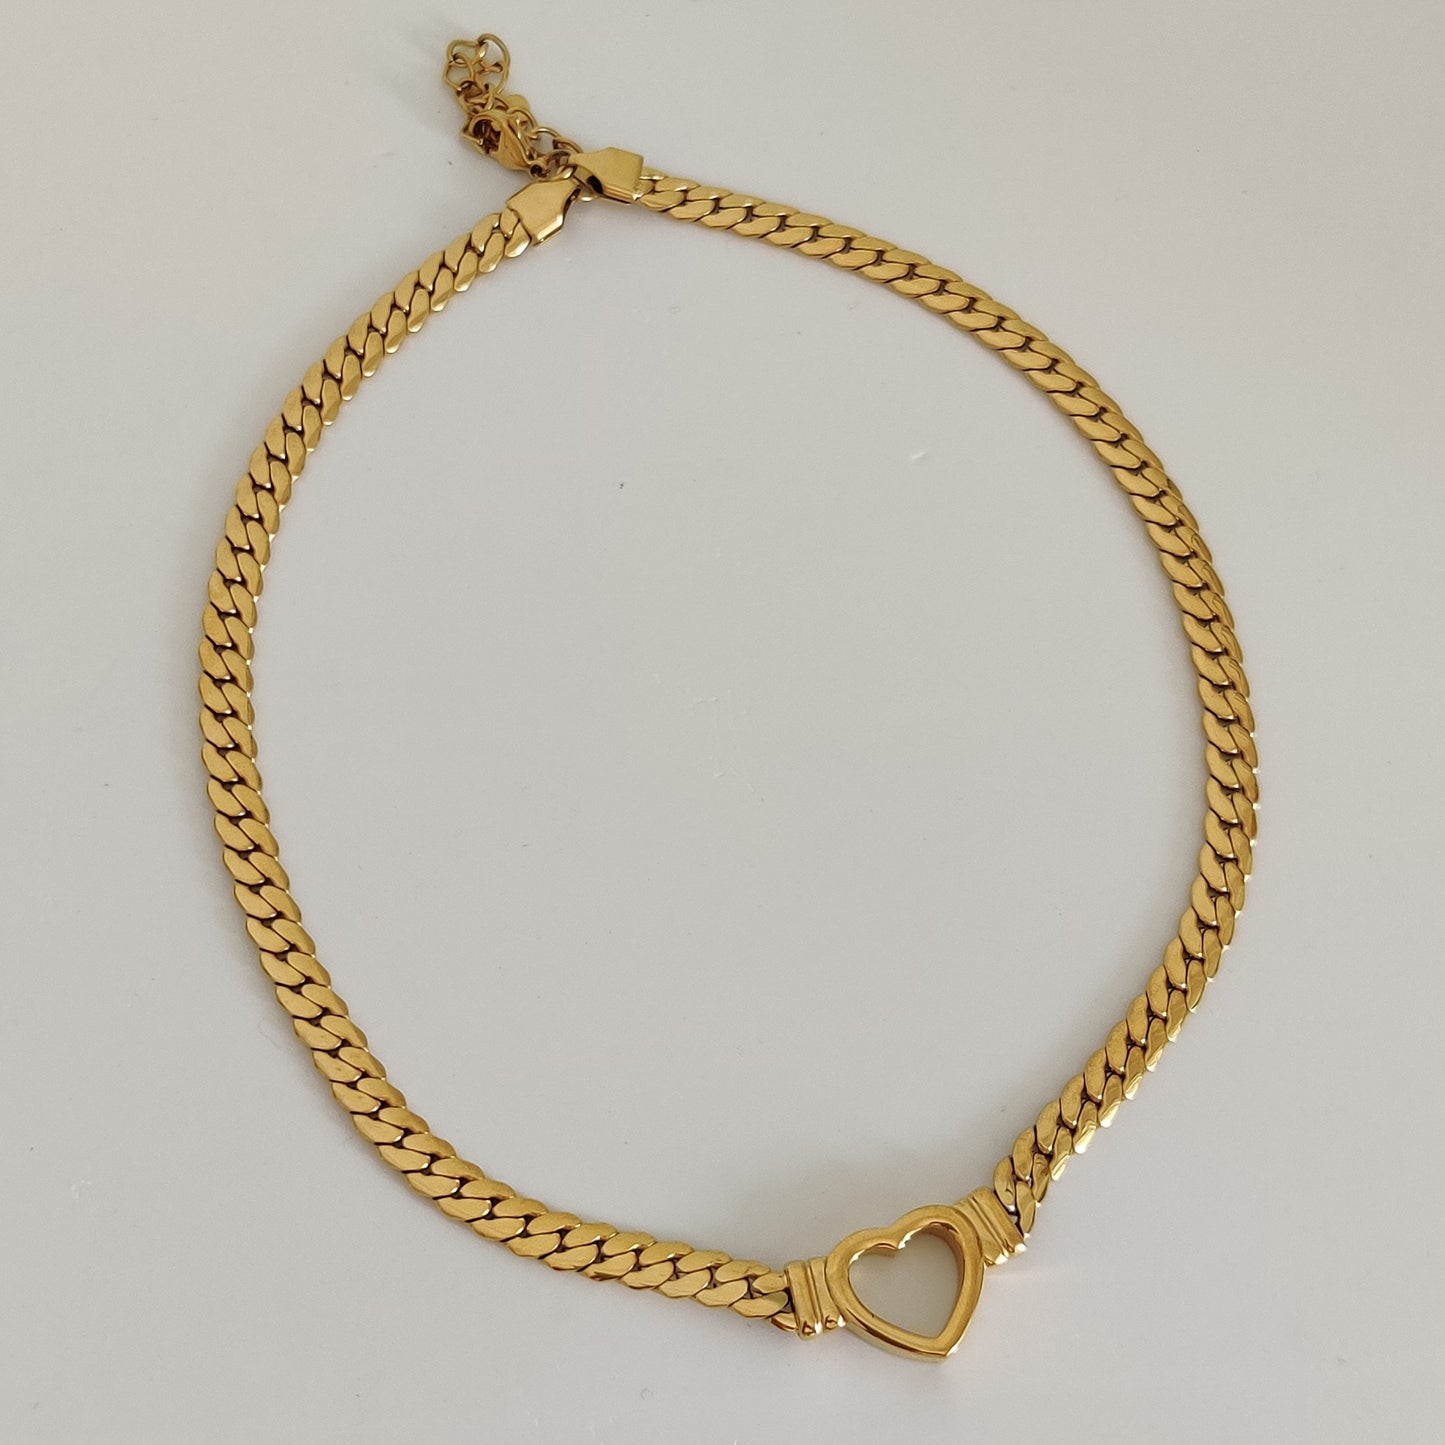 Heart Cuban Necklace